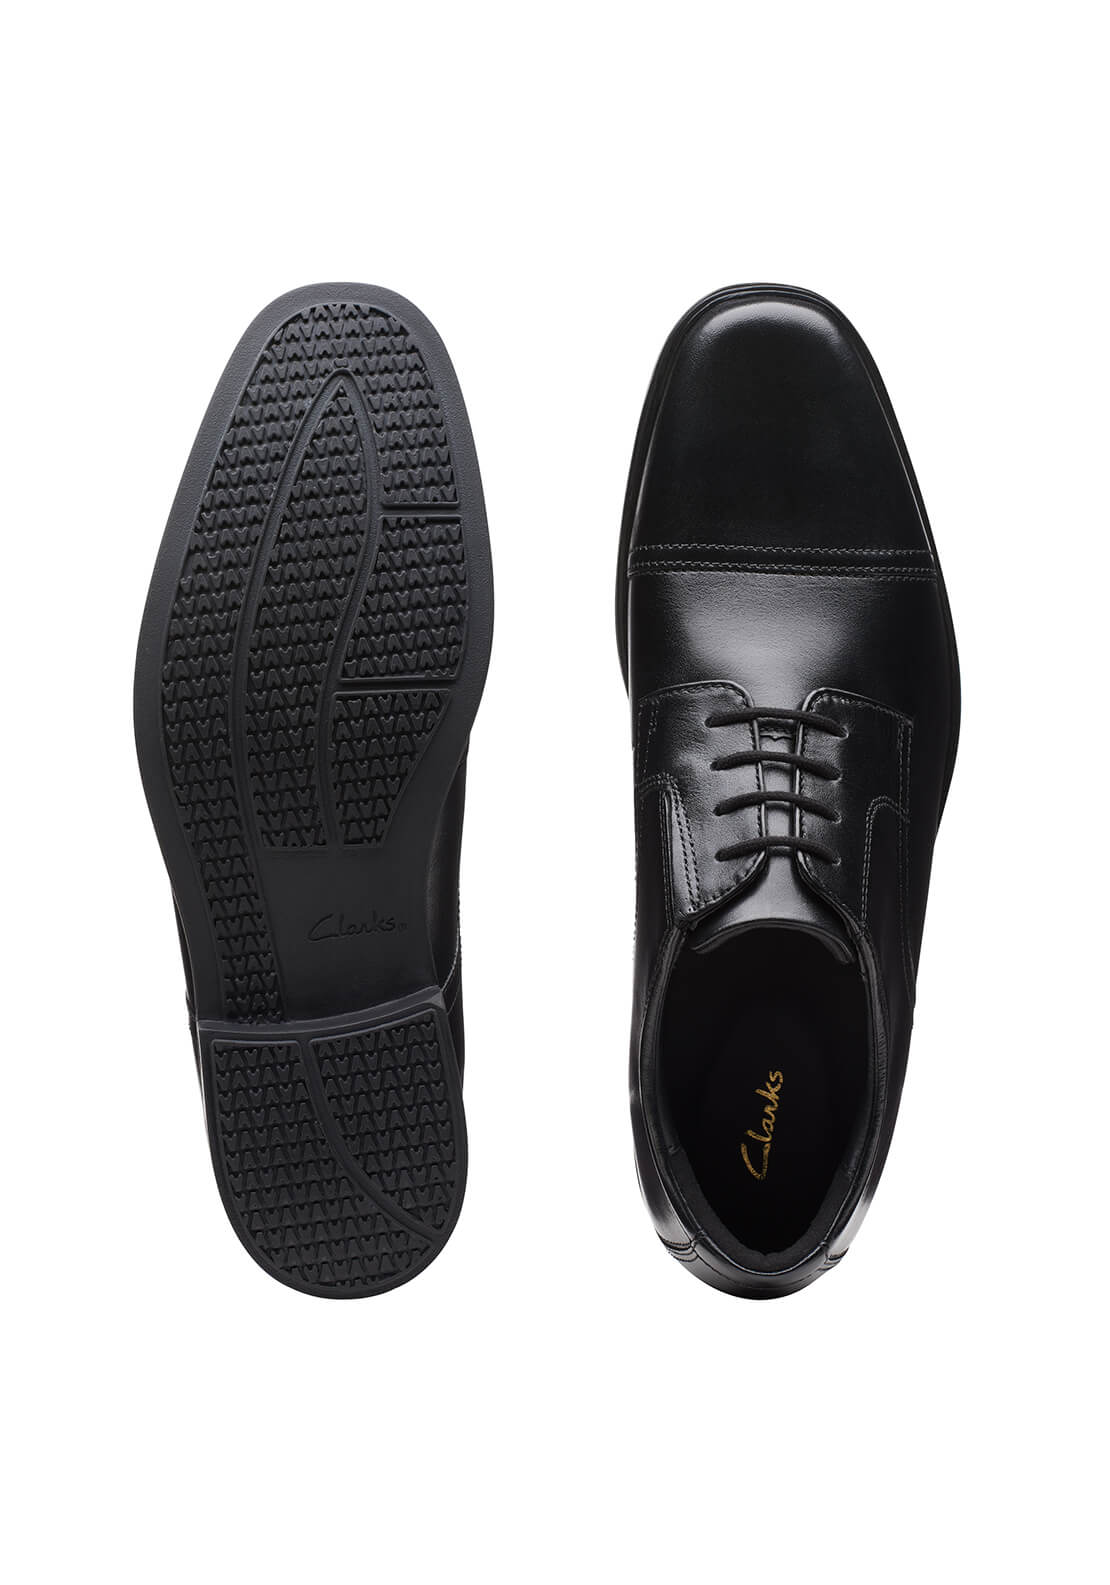 Clarks Howard Cap Formal Shoe - Black 7 Shaws Department Stores